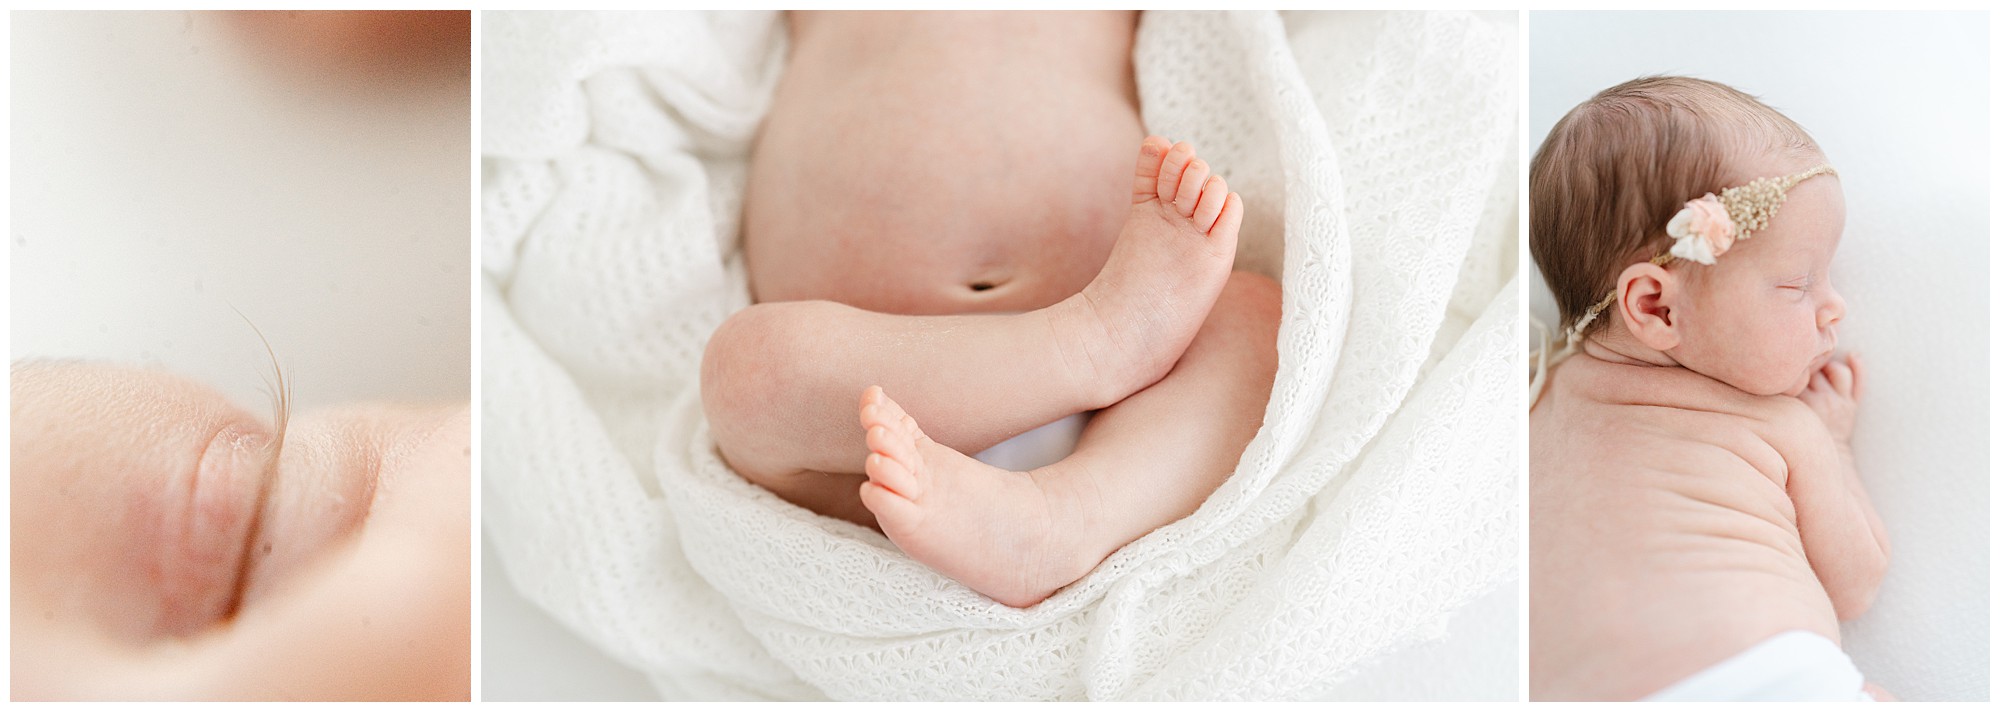 Detail shots of a baby's eyelashes, feet, and profile at an Atlanta newborn photography studio.